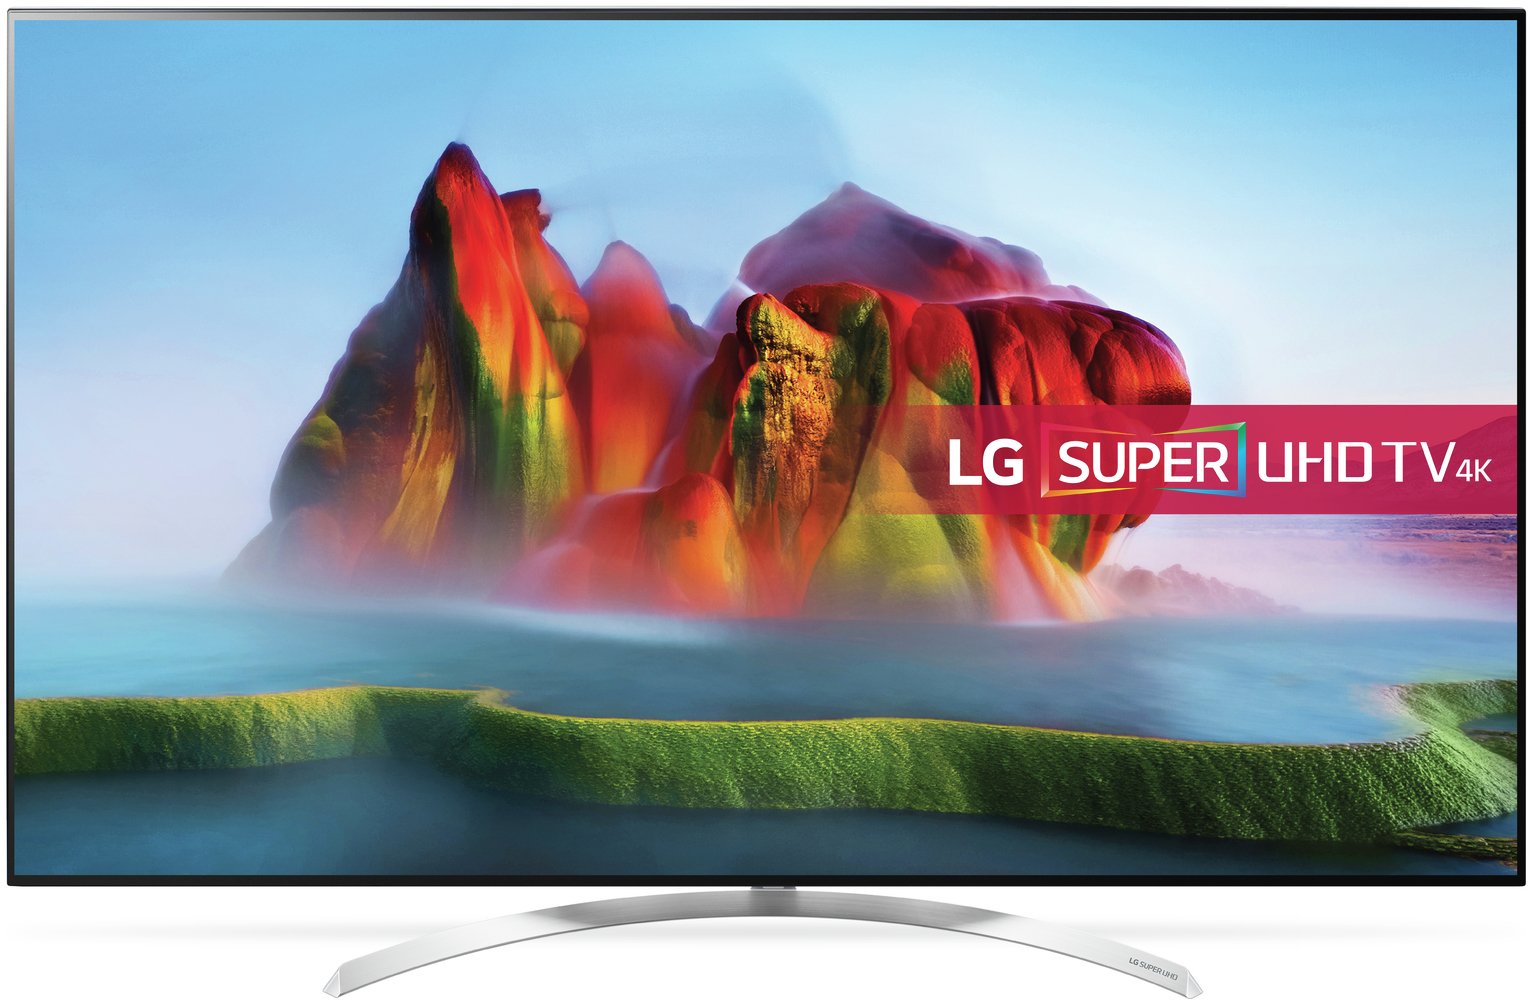 LG 55SJ850V 55 Inch Smart 4K Ultra HD TV with HDR.